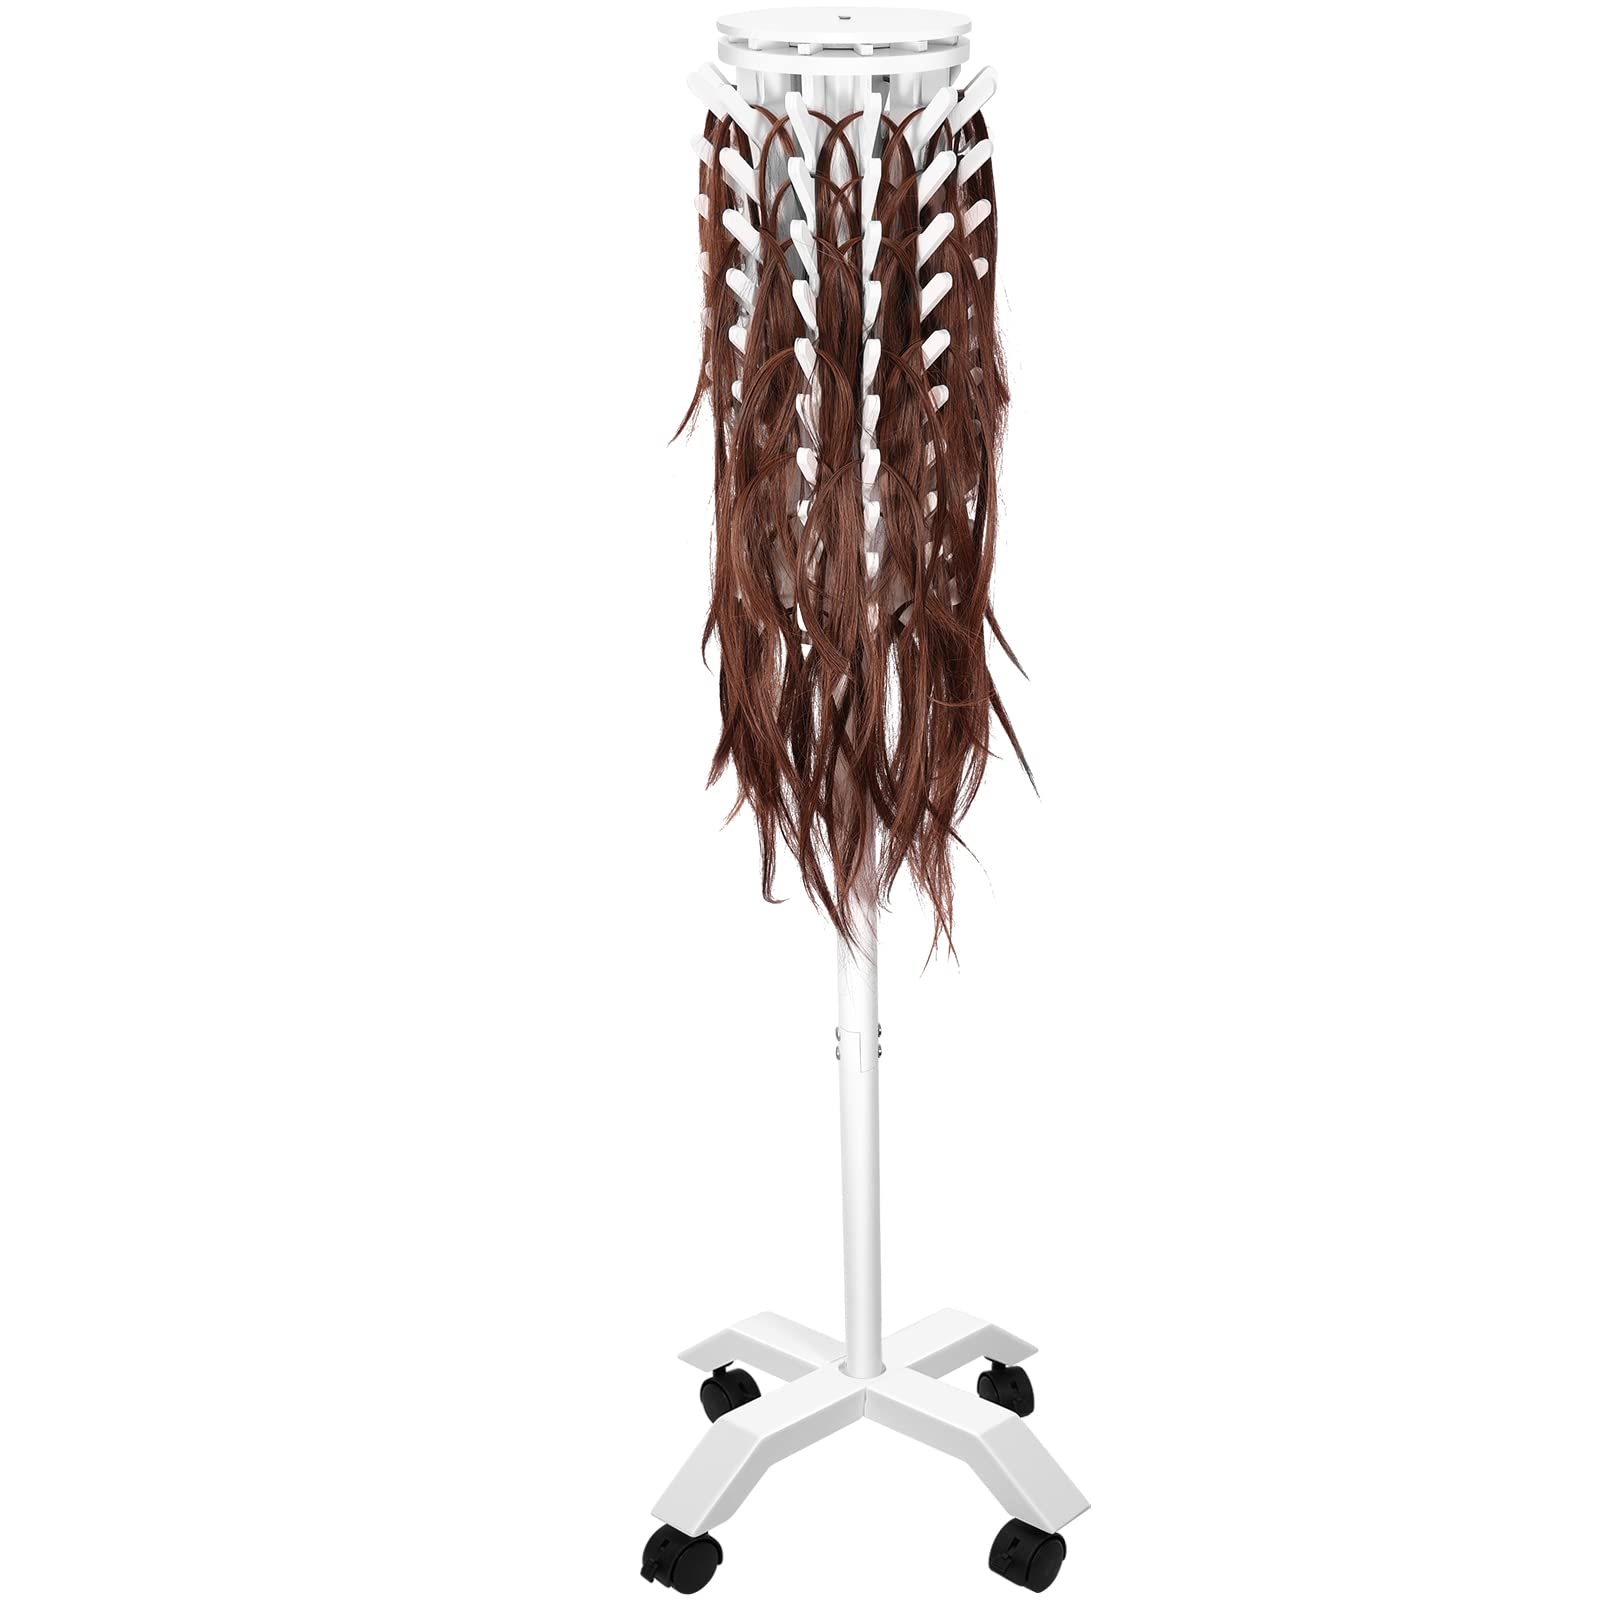 Yumkfoi Braiding Hair Rack with Sawtooth Pegs, 144 Pegs Wooden Hair Holder  for 2